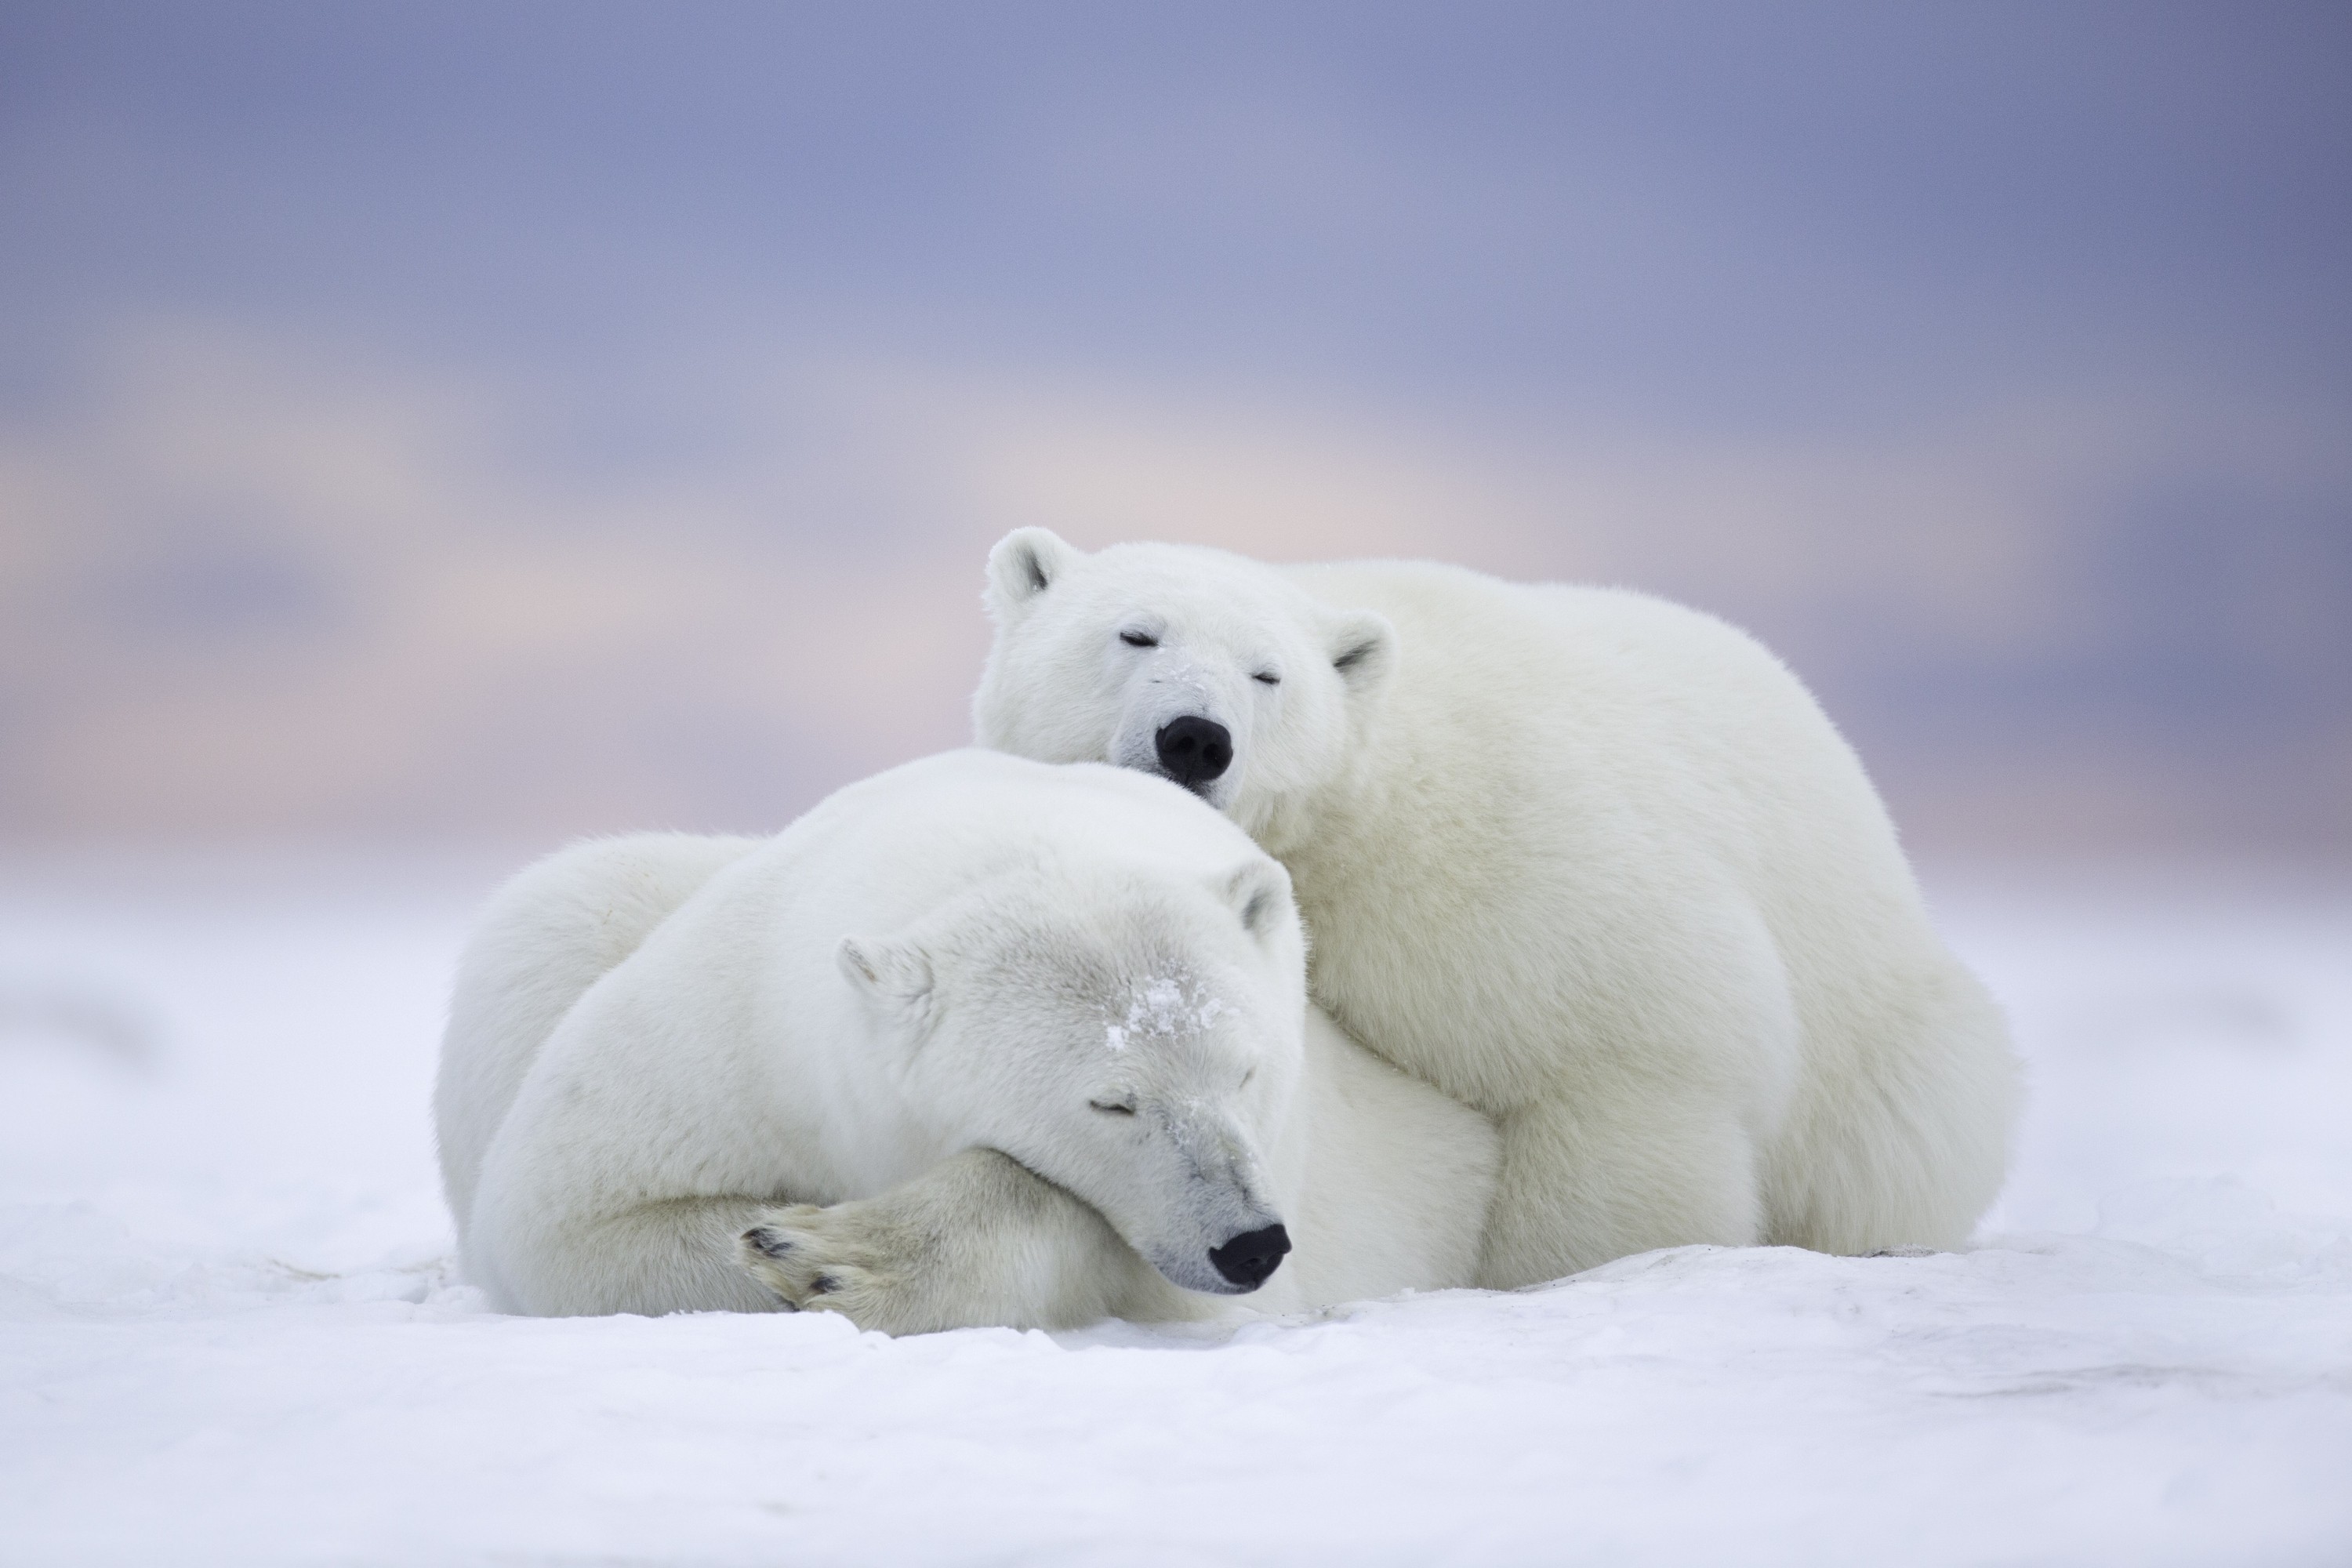 General 3000x2000 animals polar bears mammals friendship wildlife nature bears